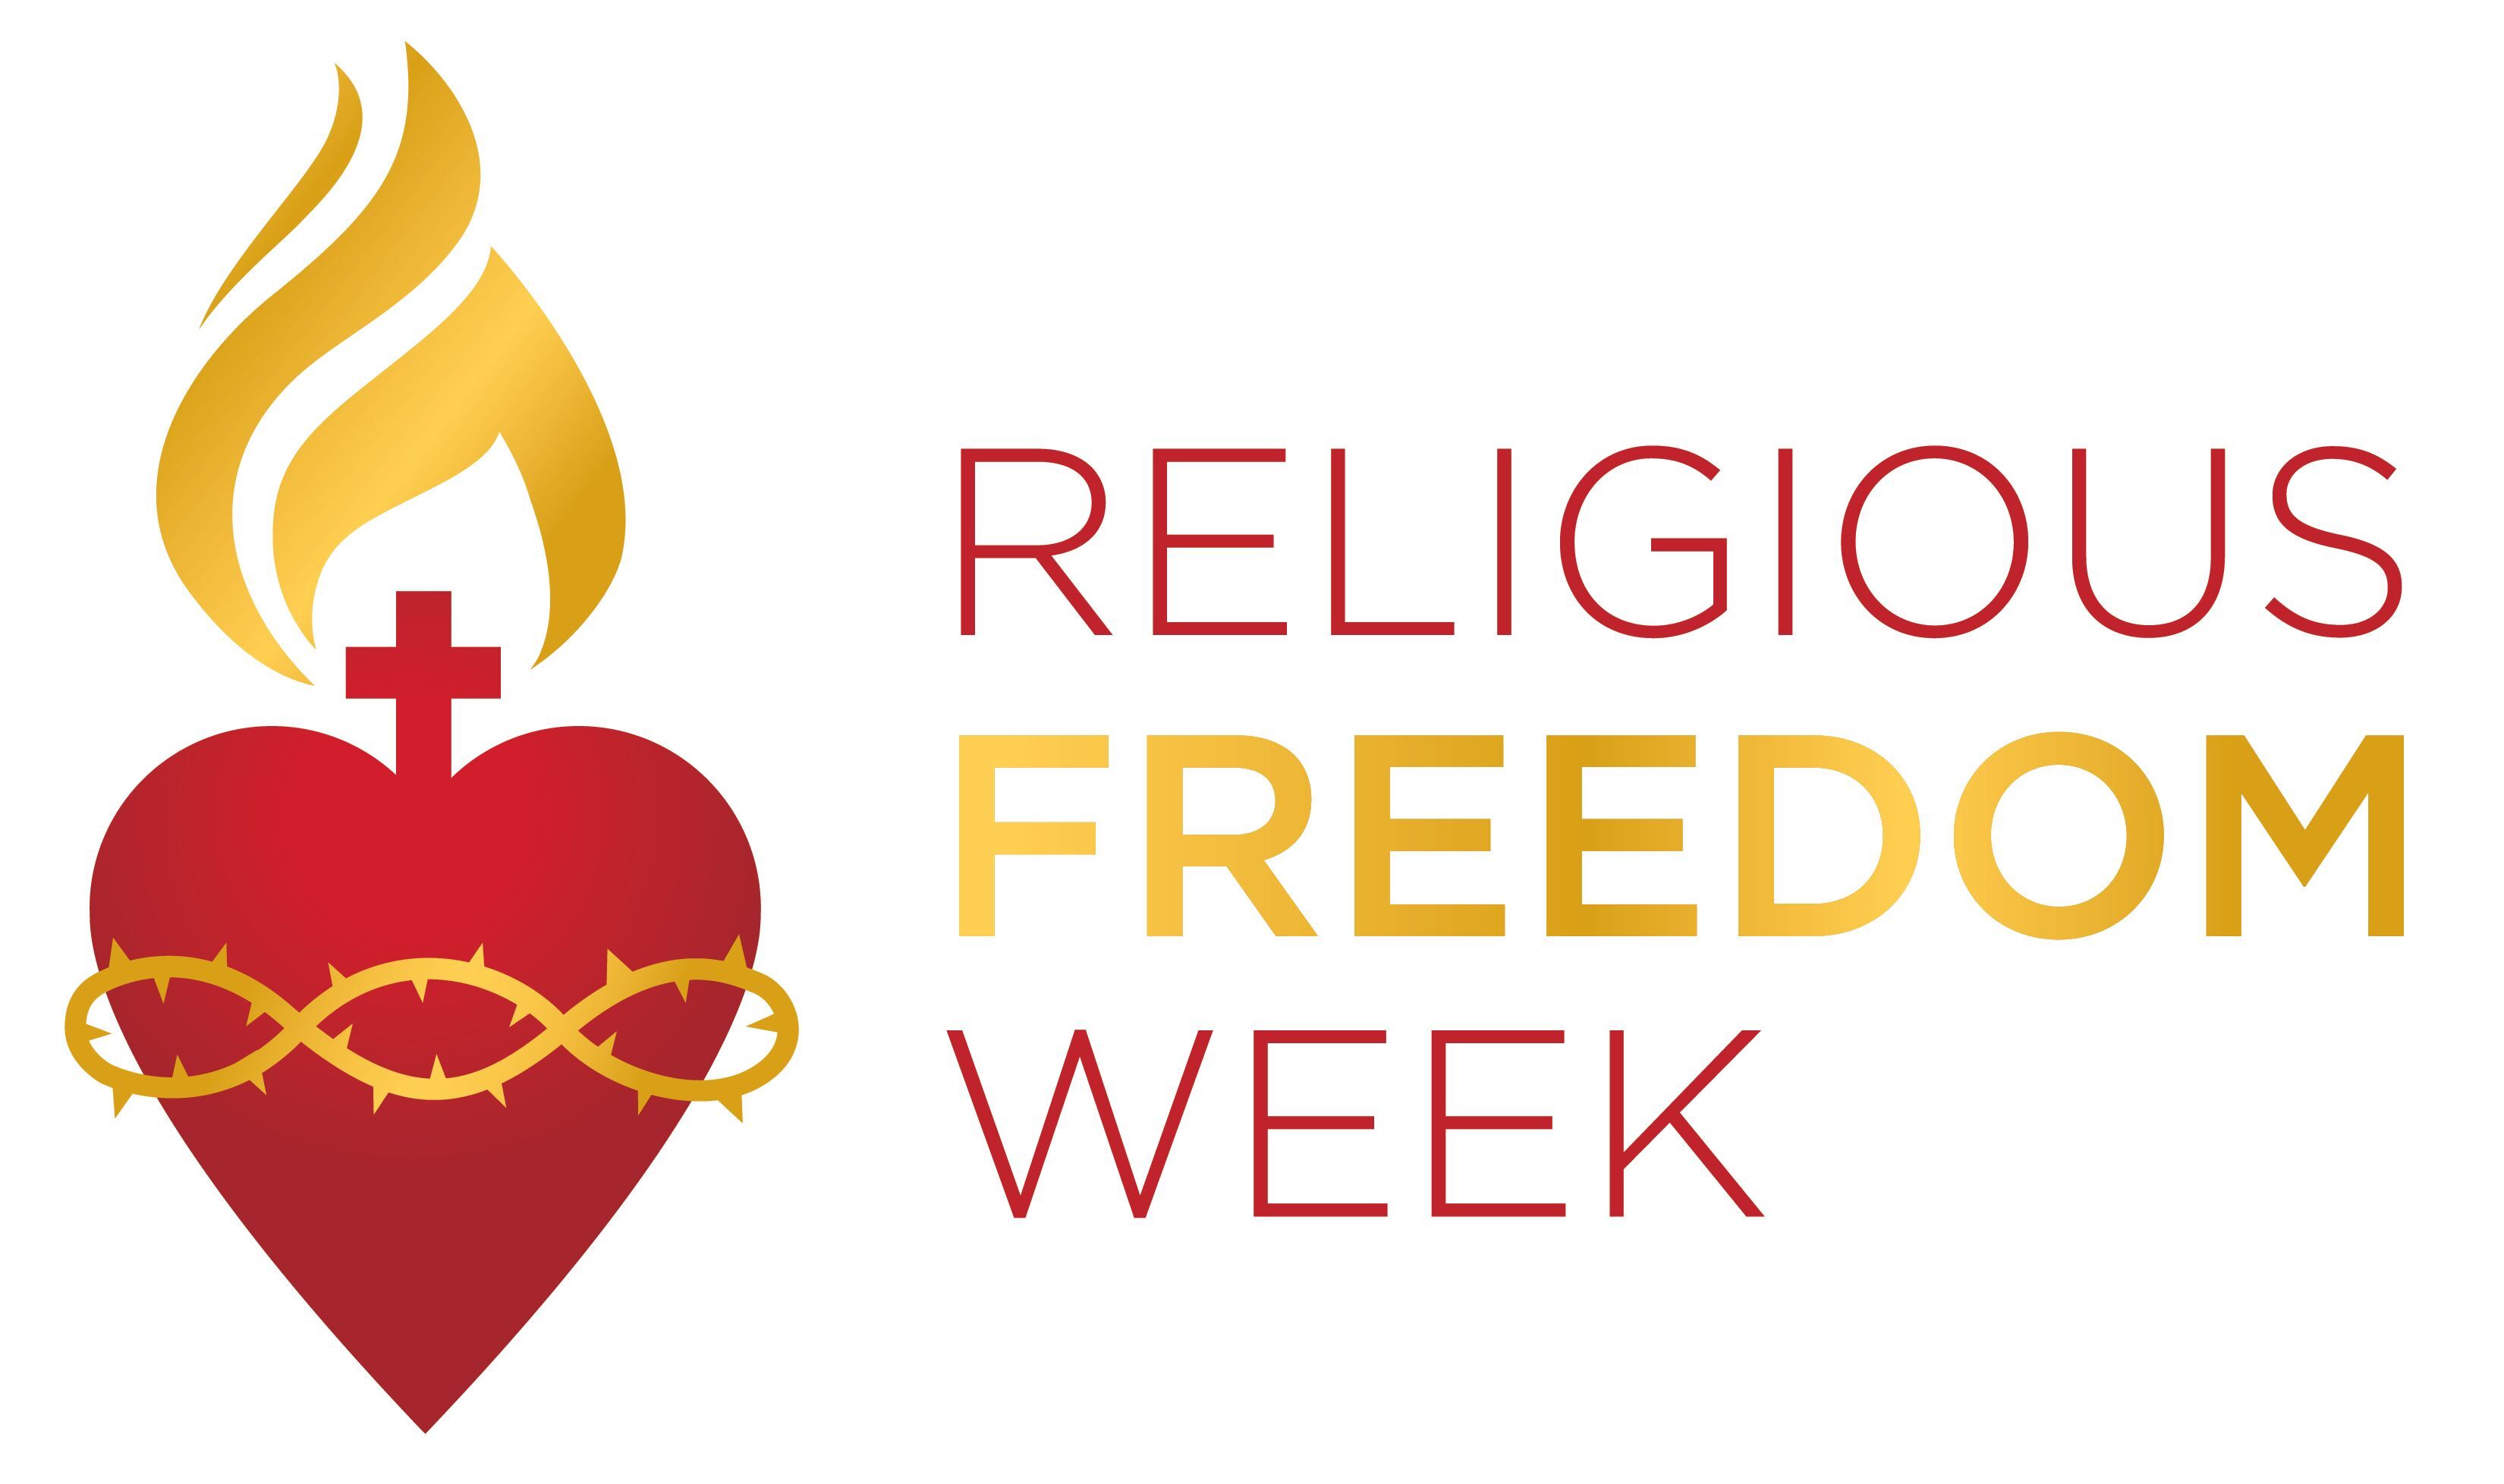 Religious Freedom Week - June 22 to June 29